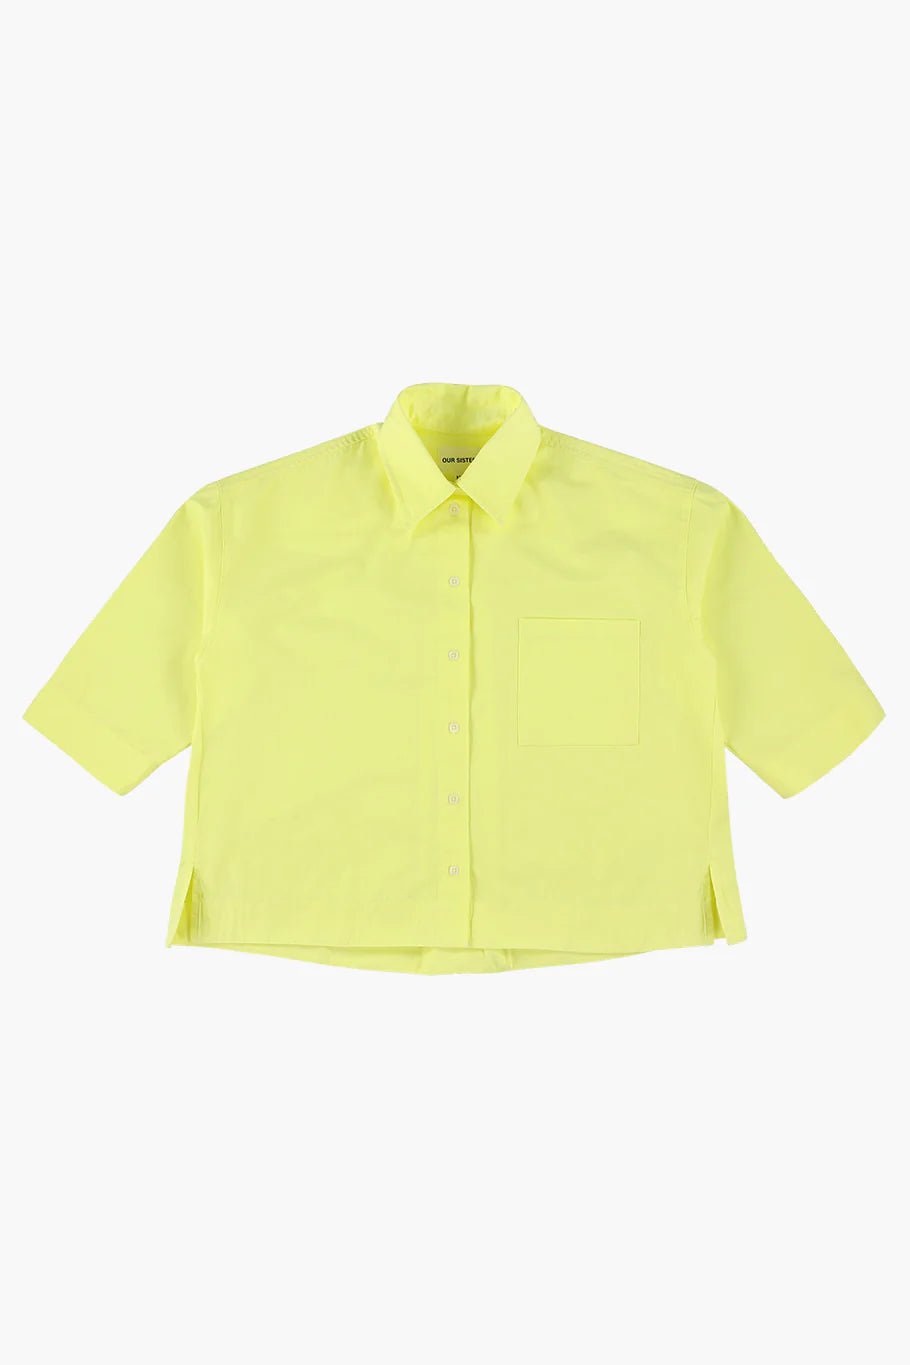 Flyinghorse Shirt Lime